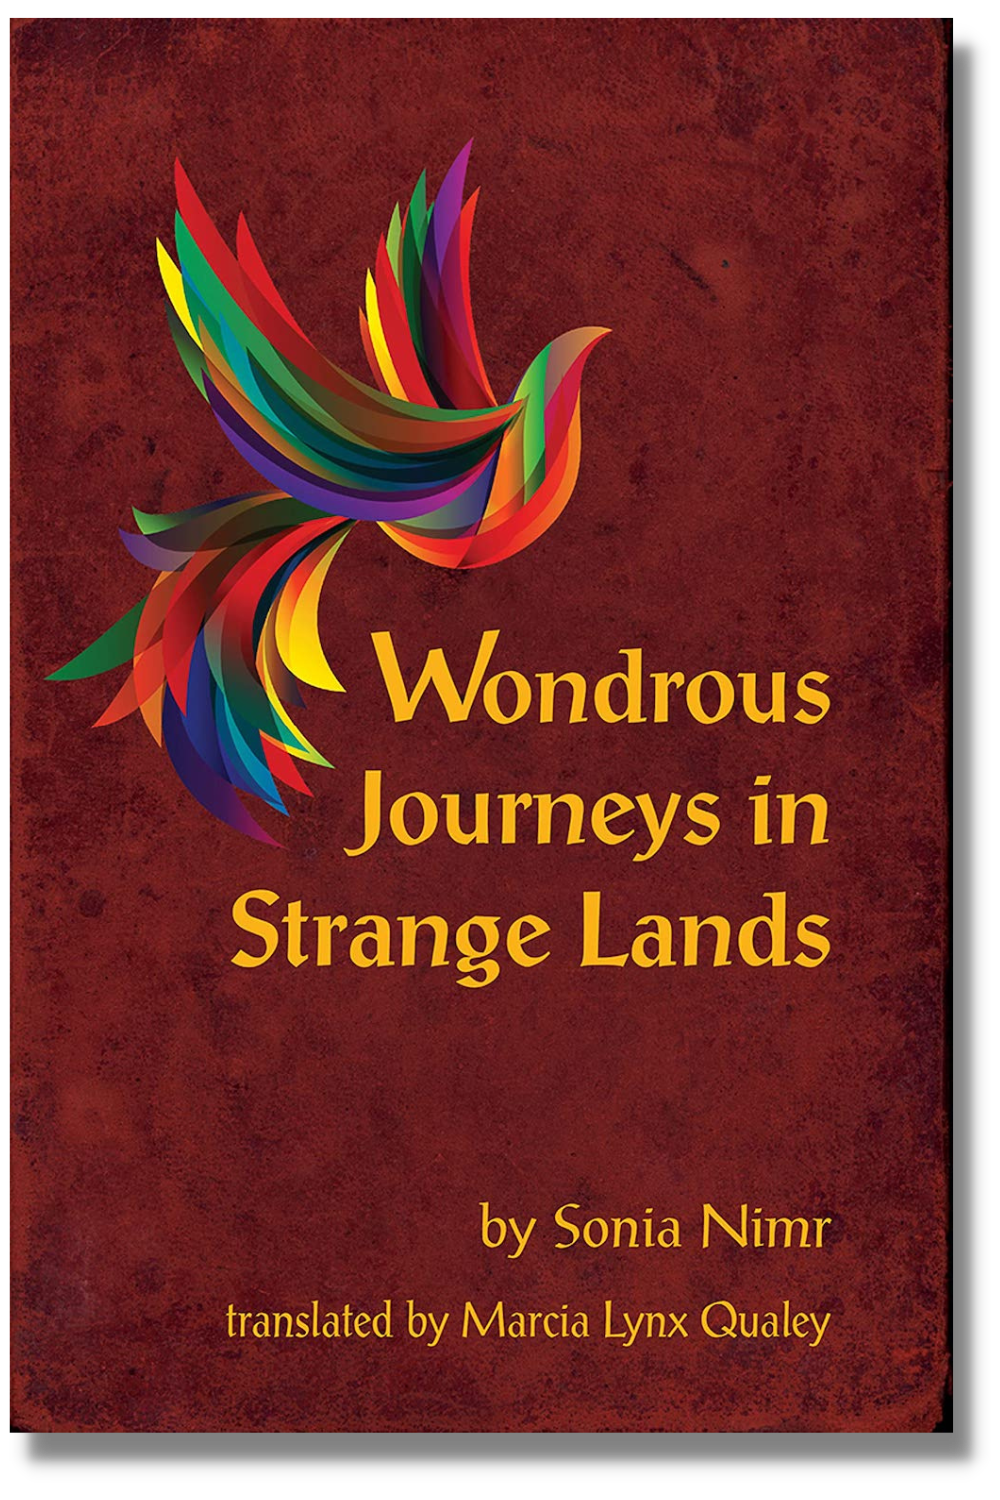 The cover of "Wondrous Journeys in Strange Lands"